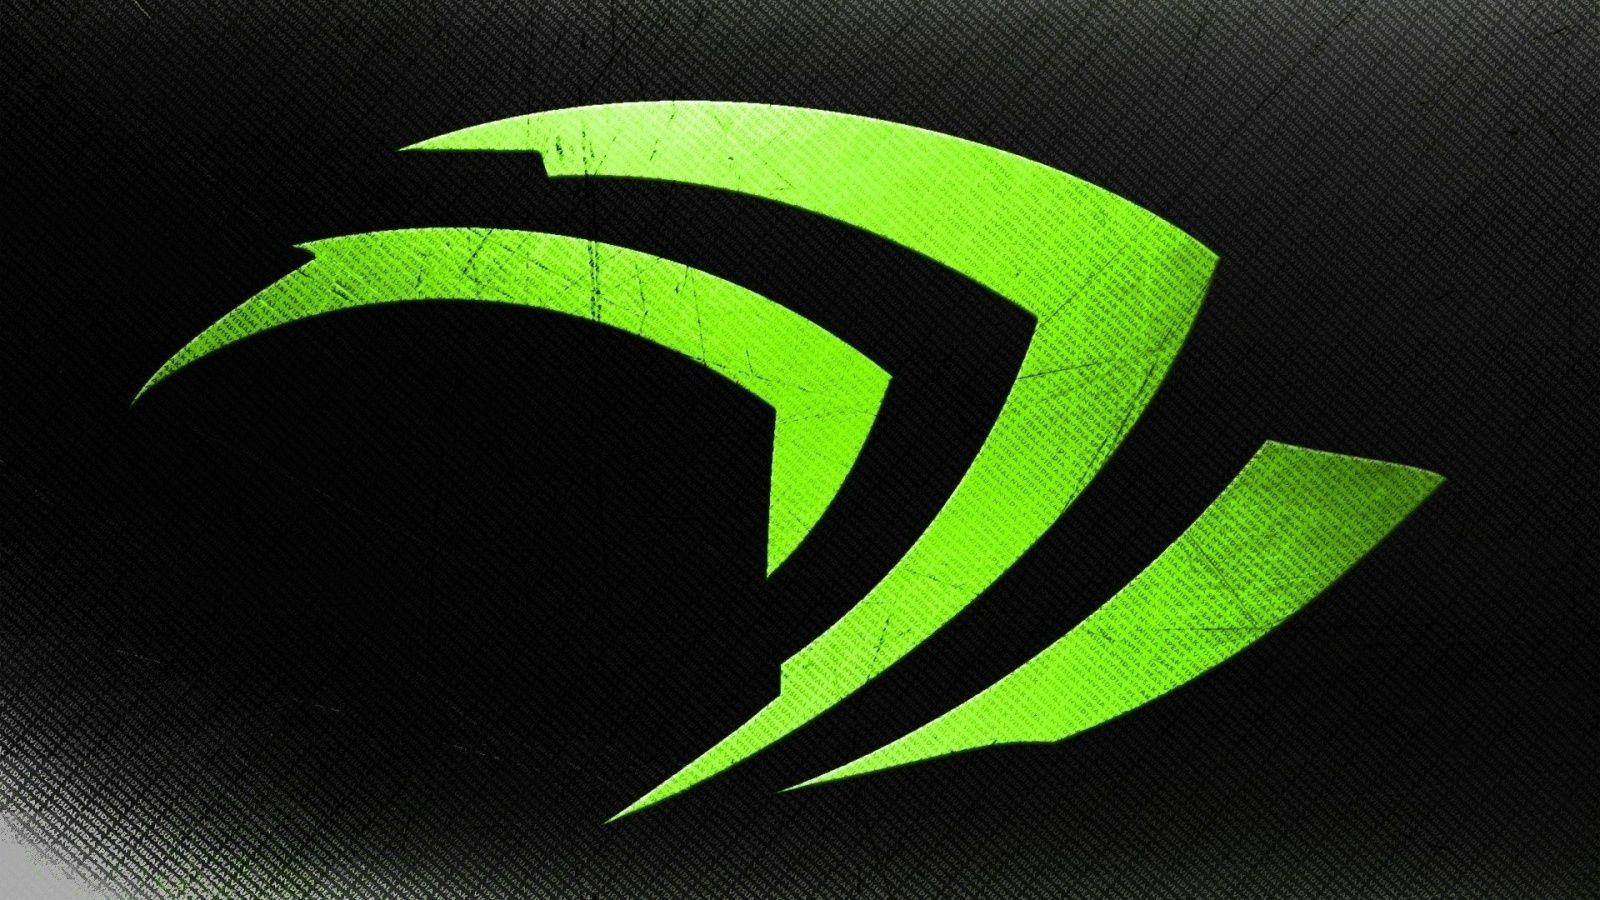 Cool HD Logo - Des download cool hd nvidia logo brand green black background - Clip ...